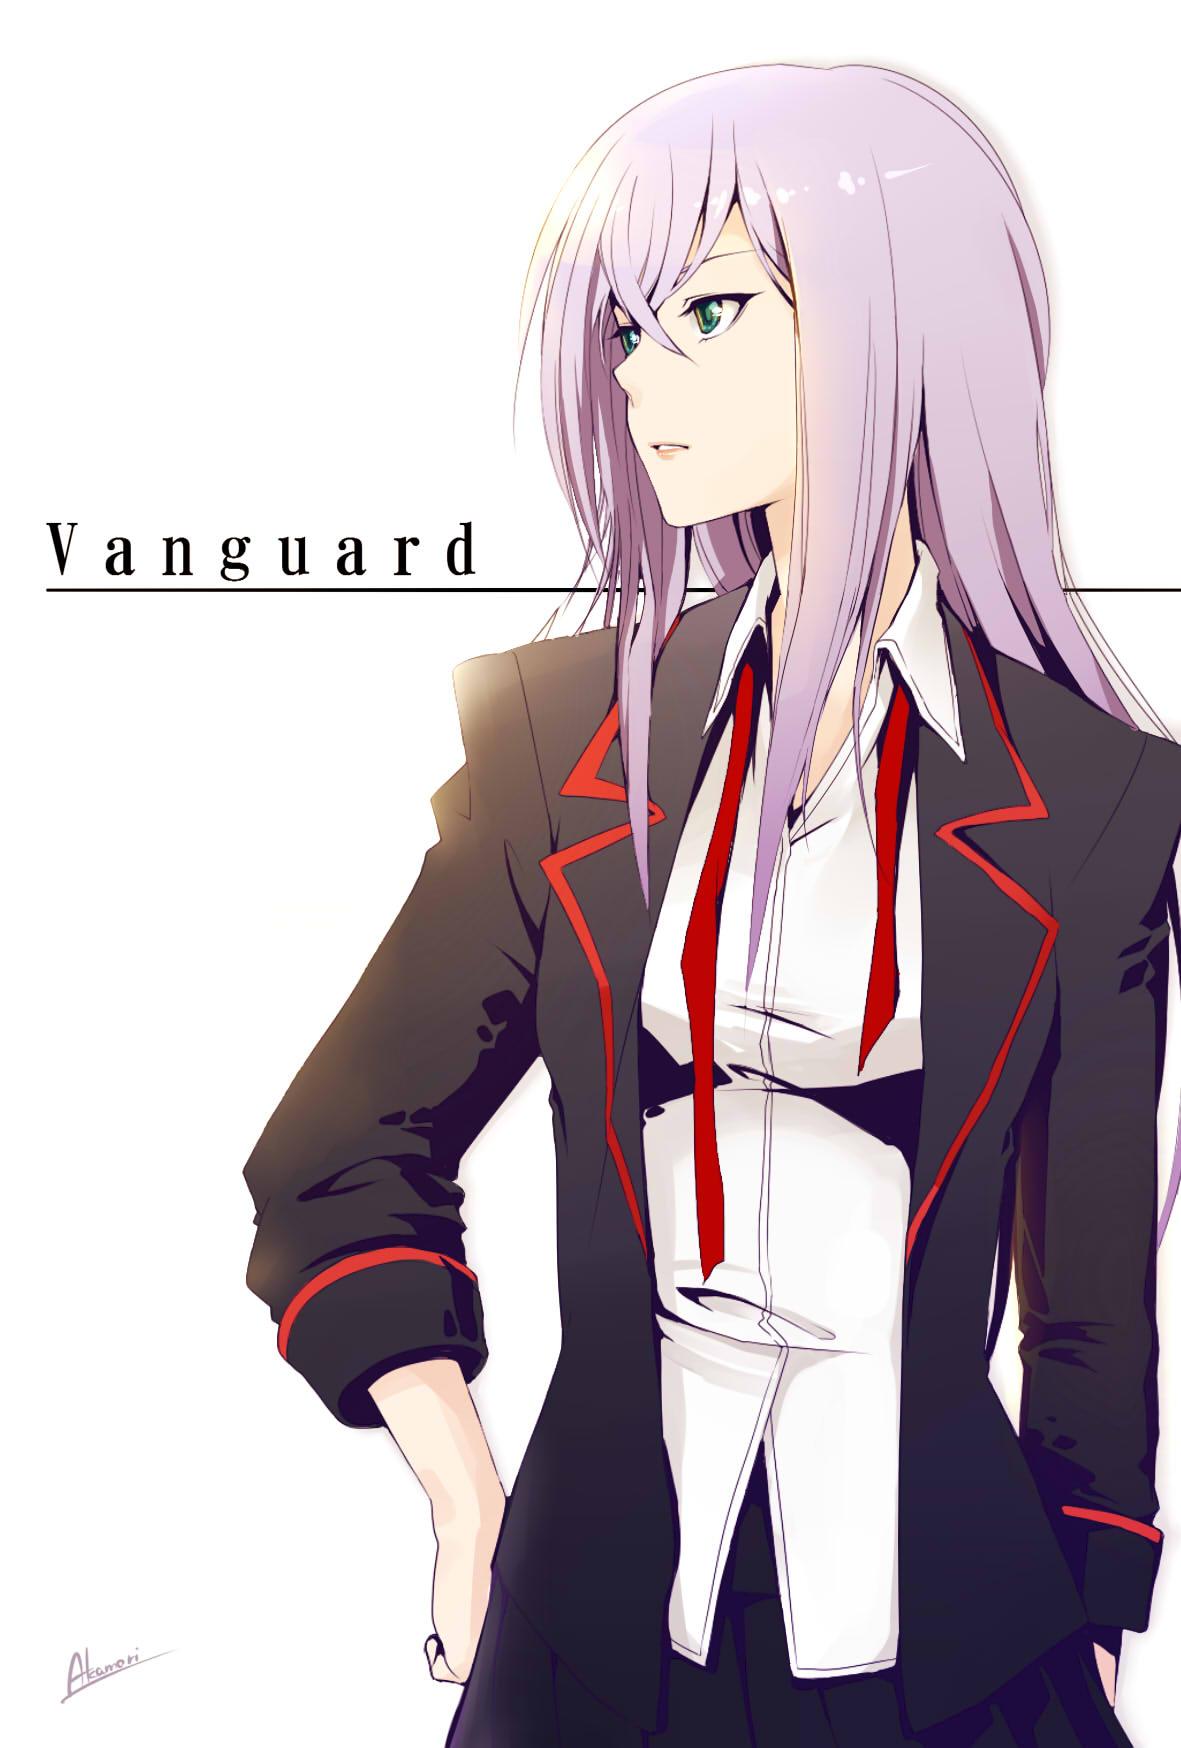 Cardfight!! Vanguard Anime Image Board